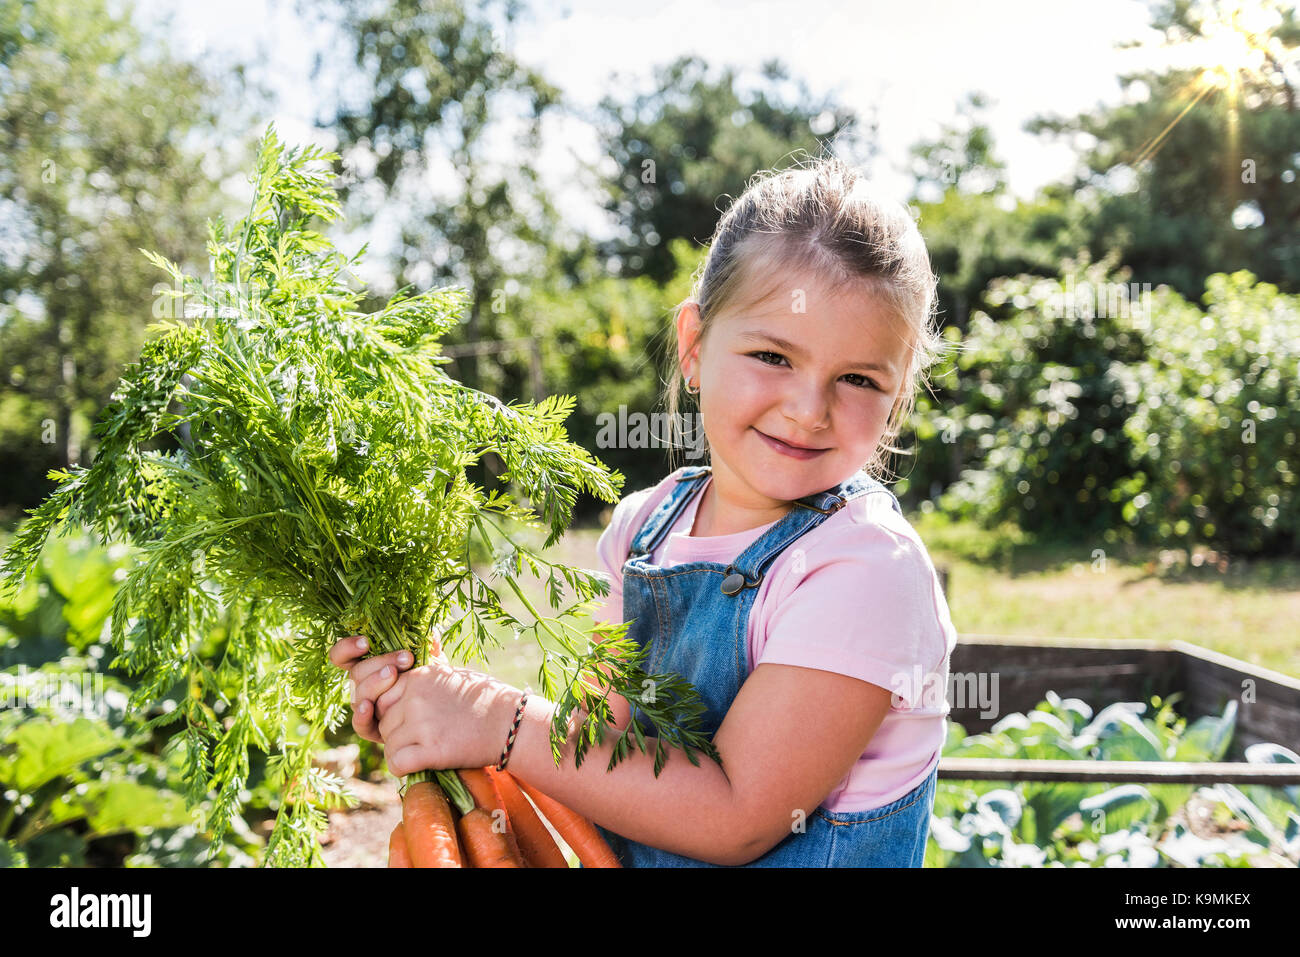 Portrait of smiling girl in garden holding bunch of carrots Stock Photo